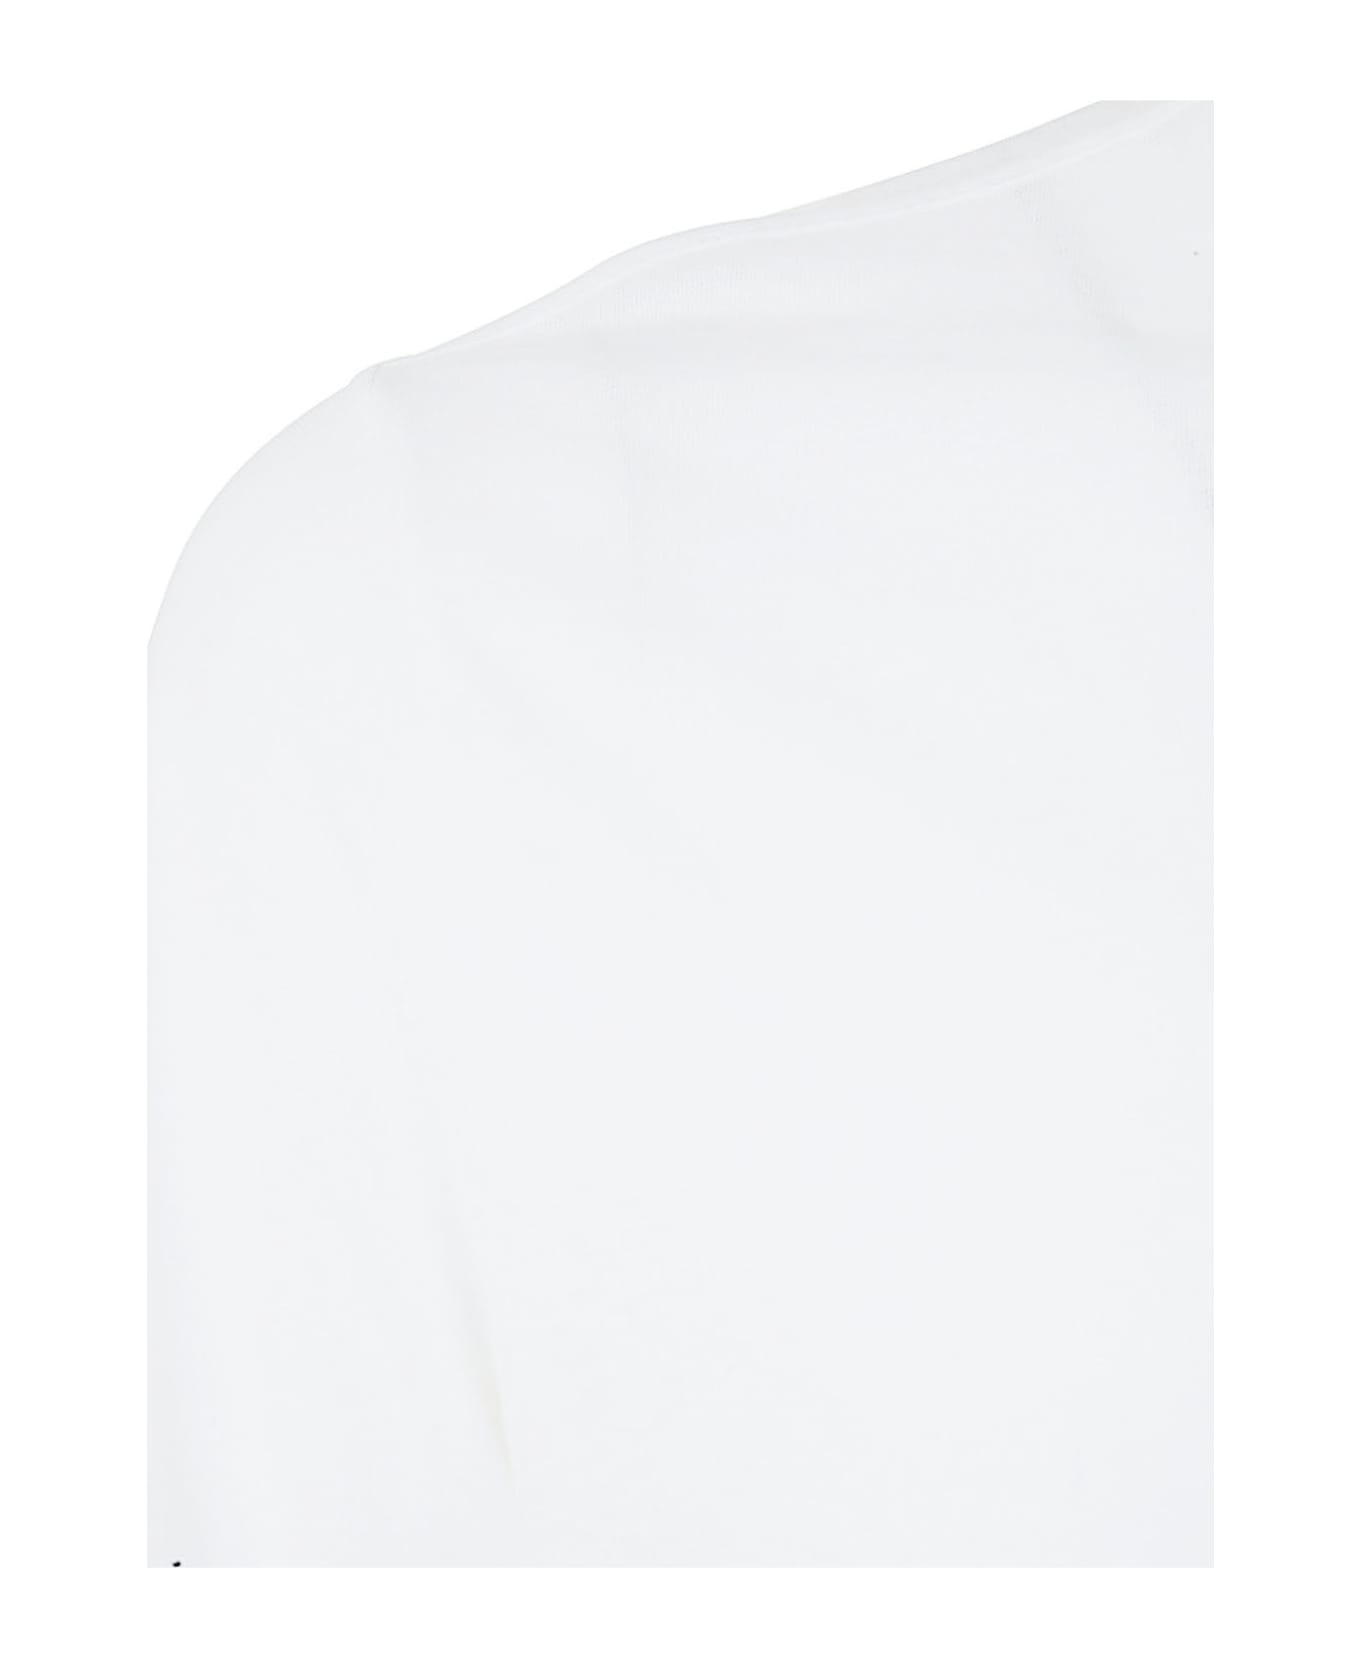 Zanone Long Sleeves Polo - White